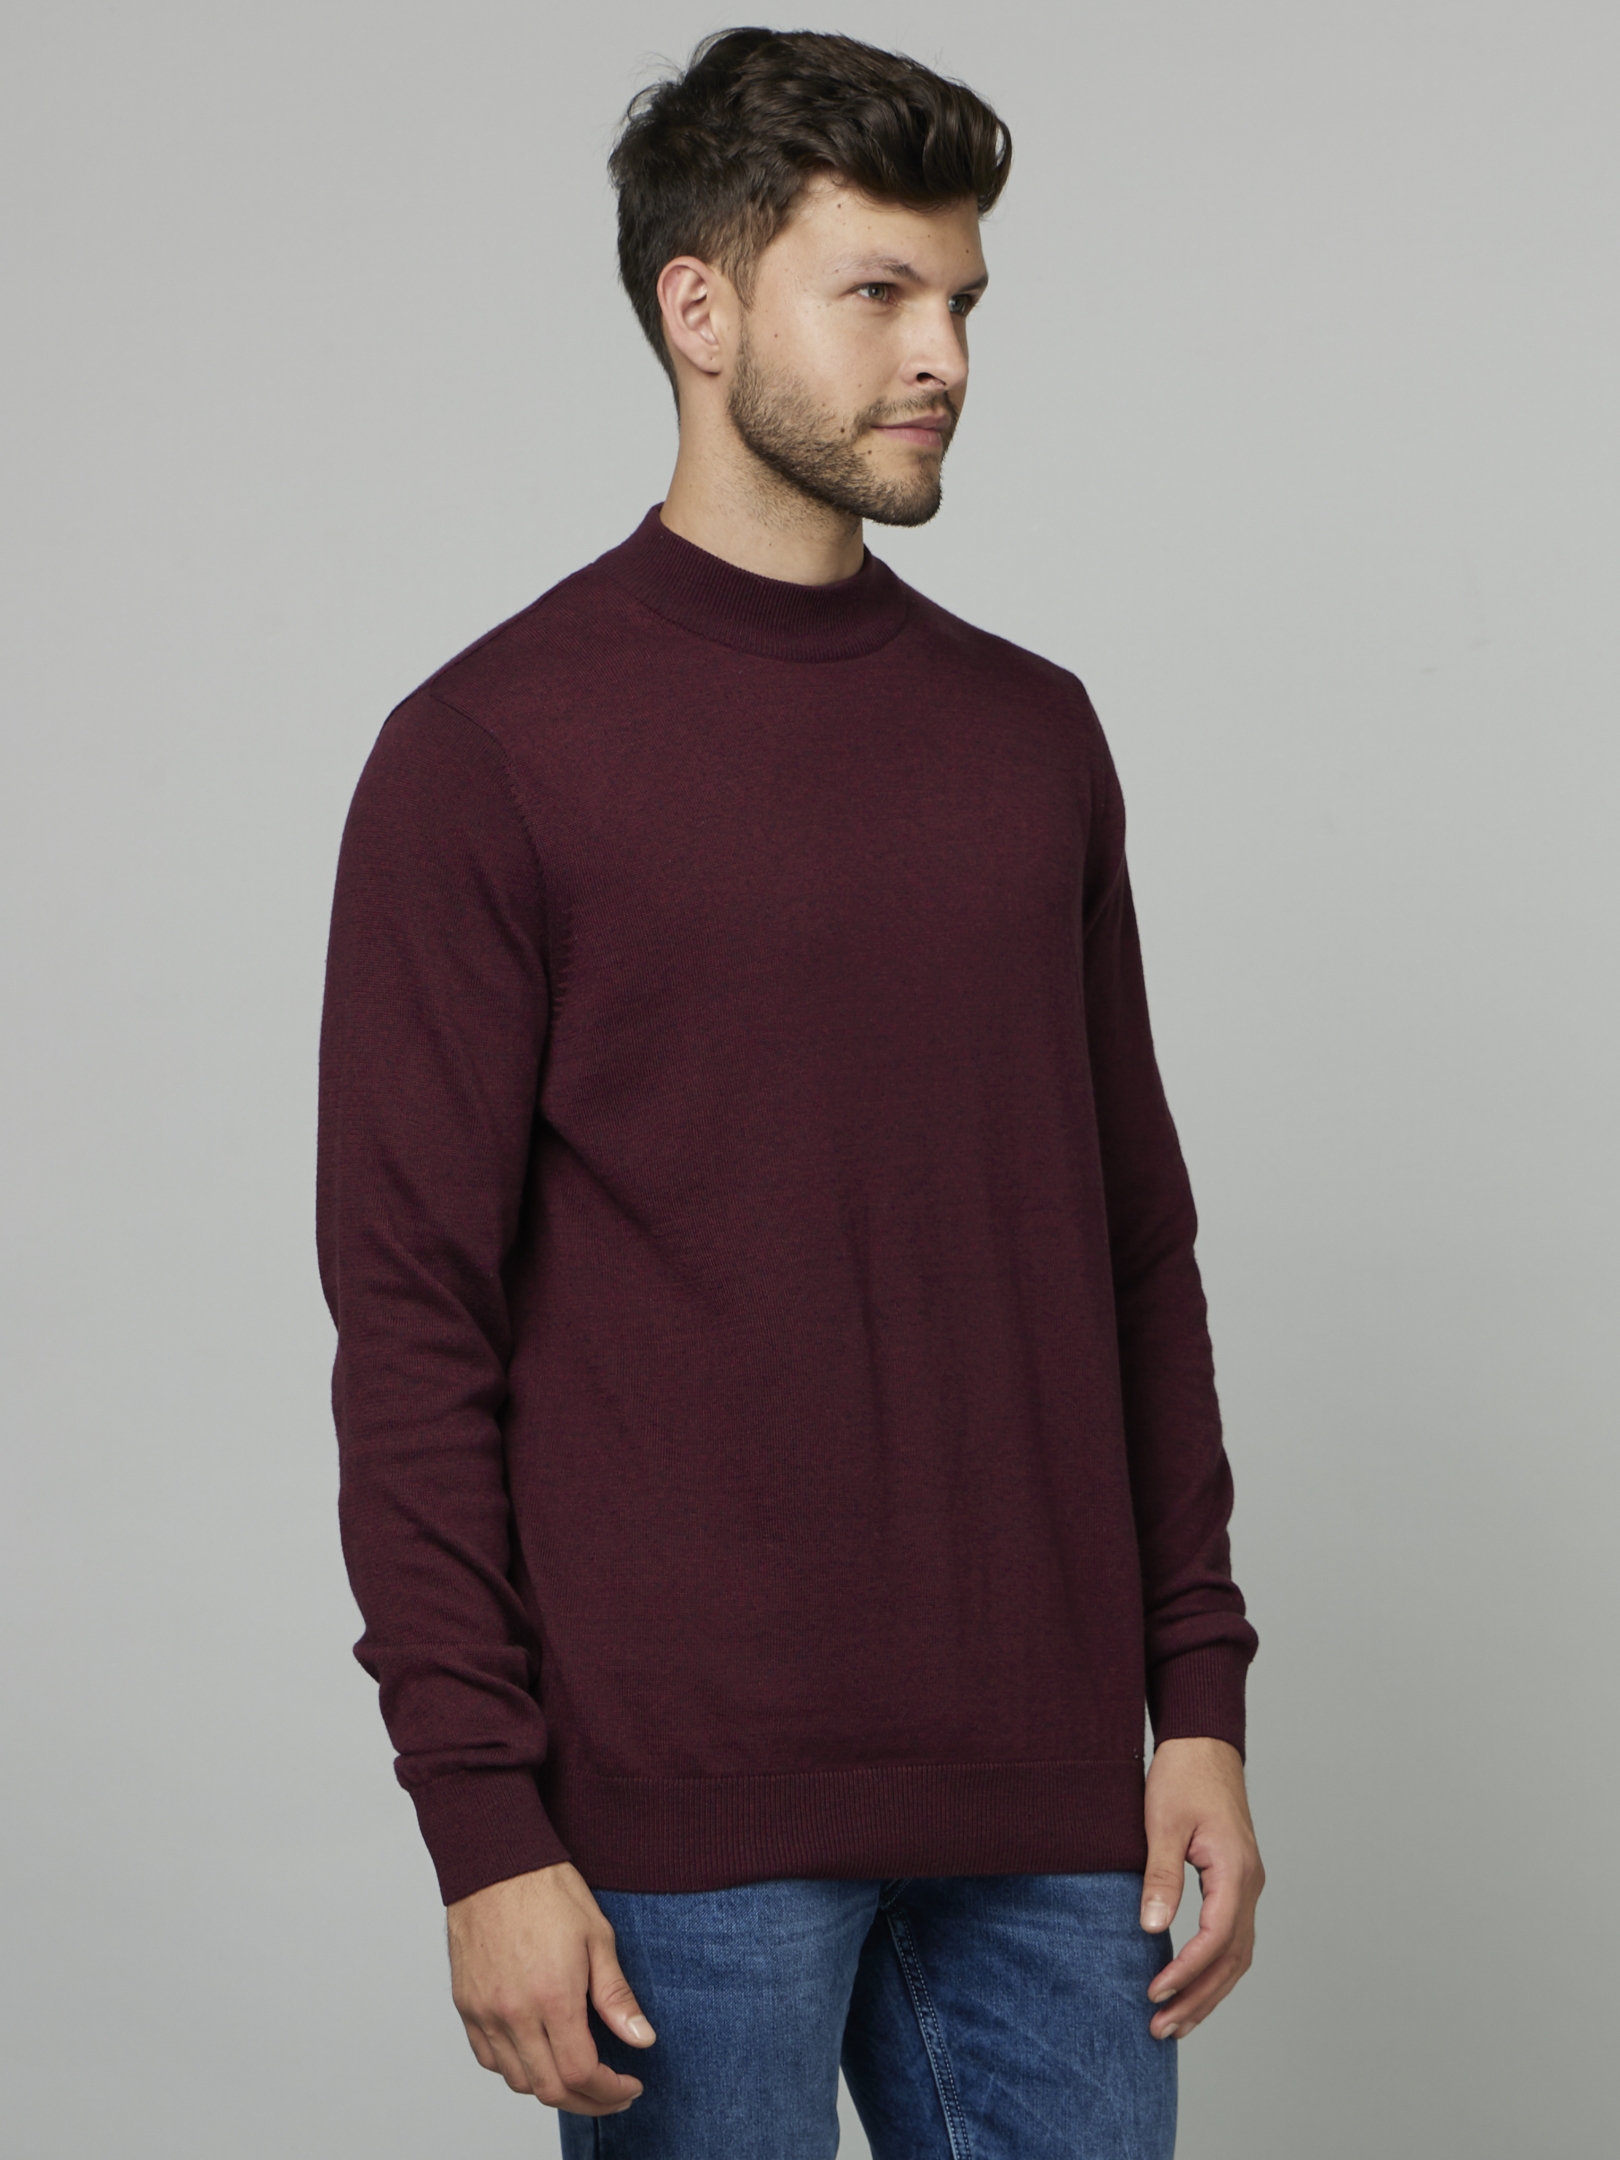 Men's Brown Solid Sweaters